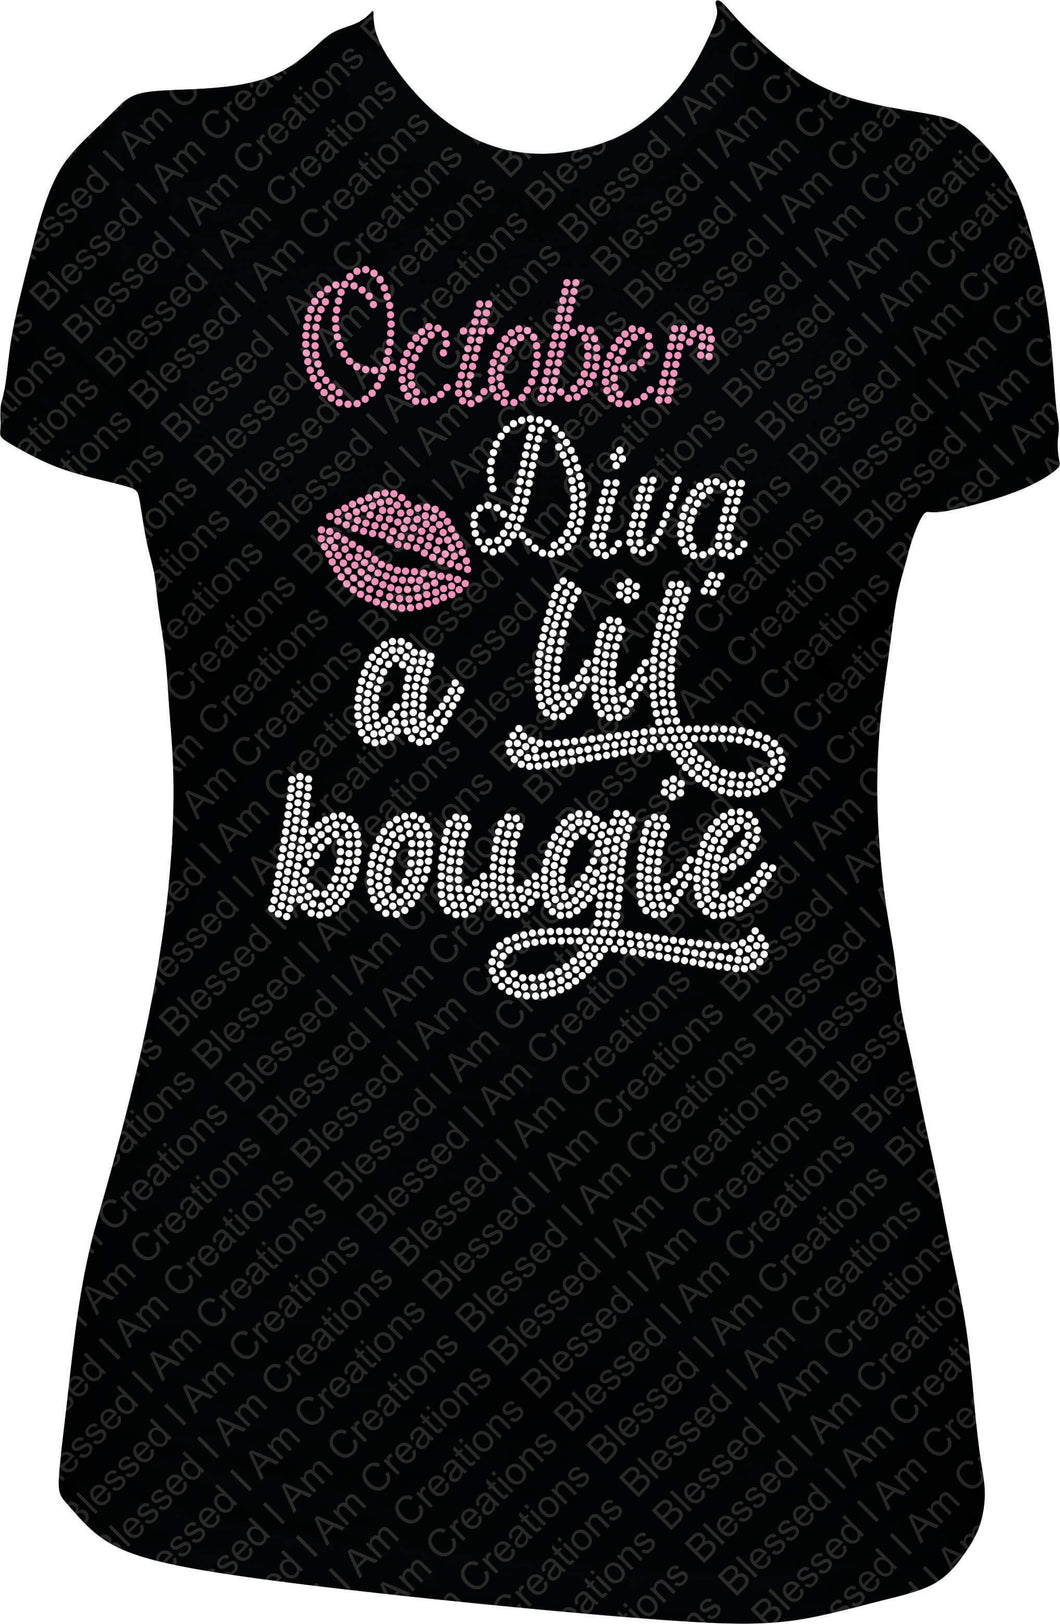 October Diva a lil bougie Rhinestone Birthday Shirt